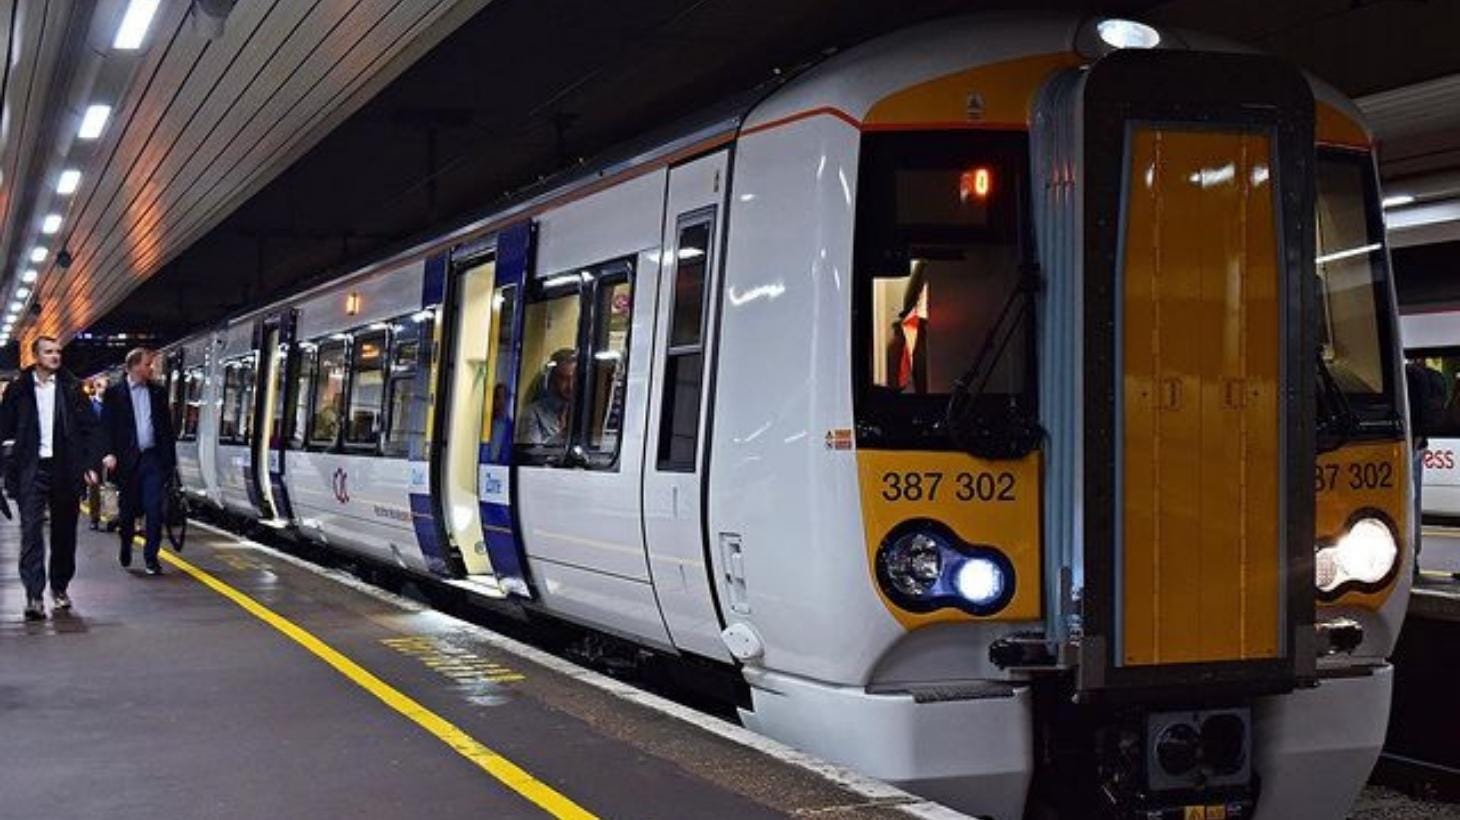 c2c page rail ltd train ©train.spotter.london (Instagram)